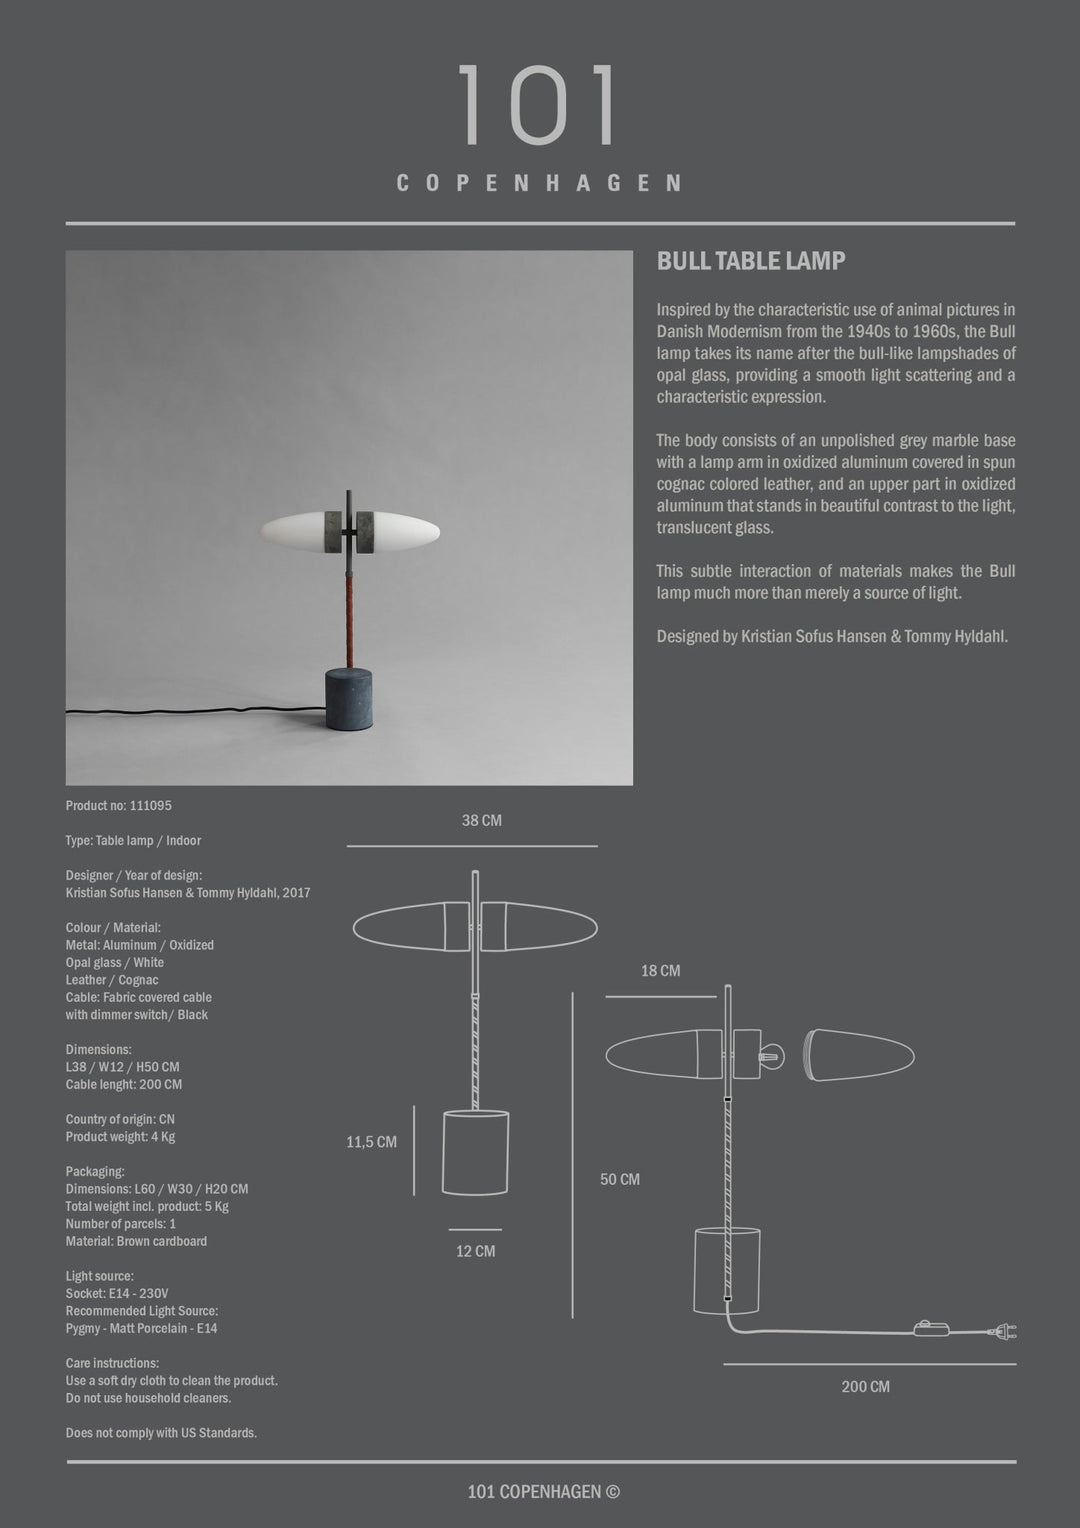 101 Copenhagen Bull Table Lamp - Oxidized - $575.00